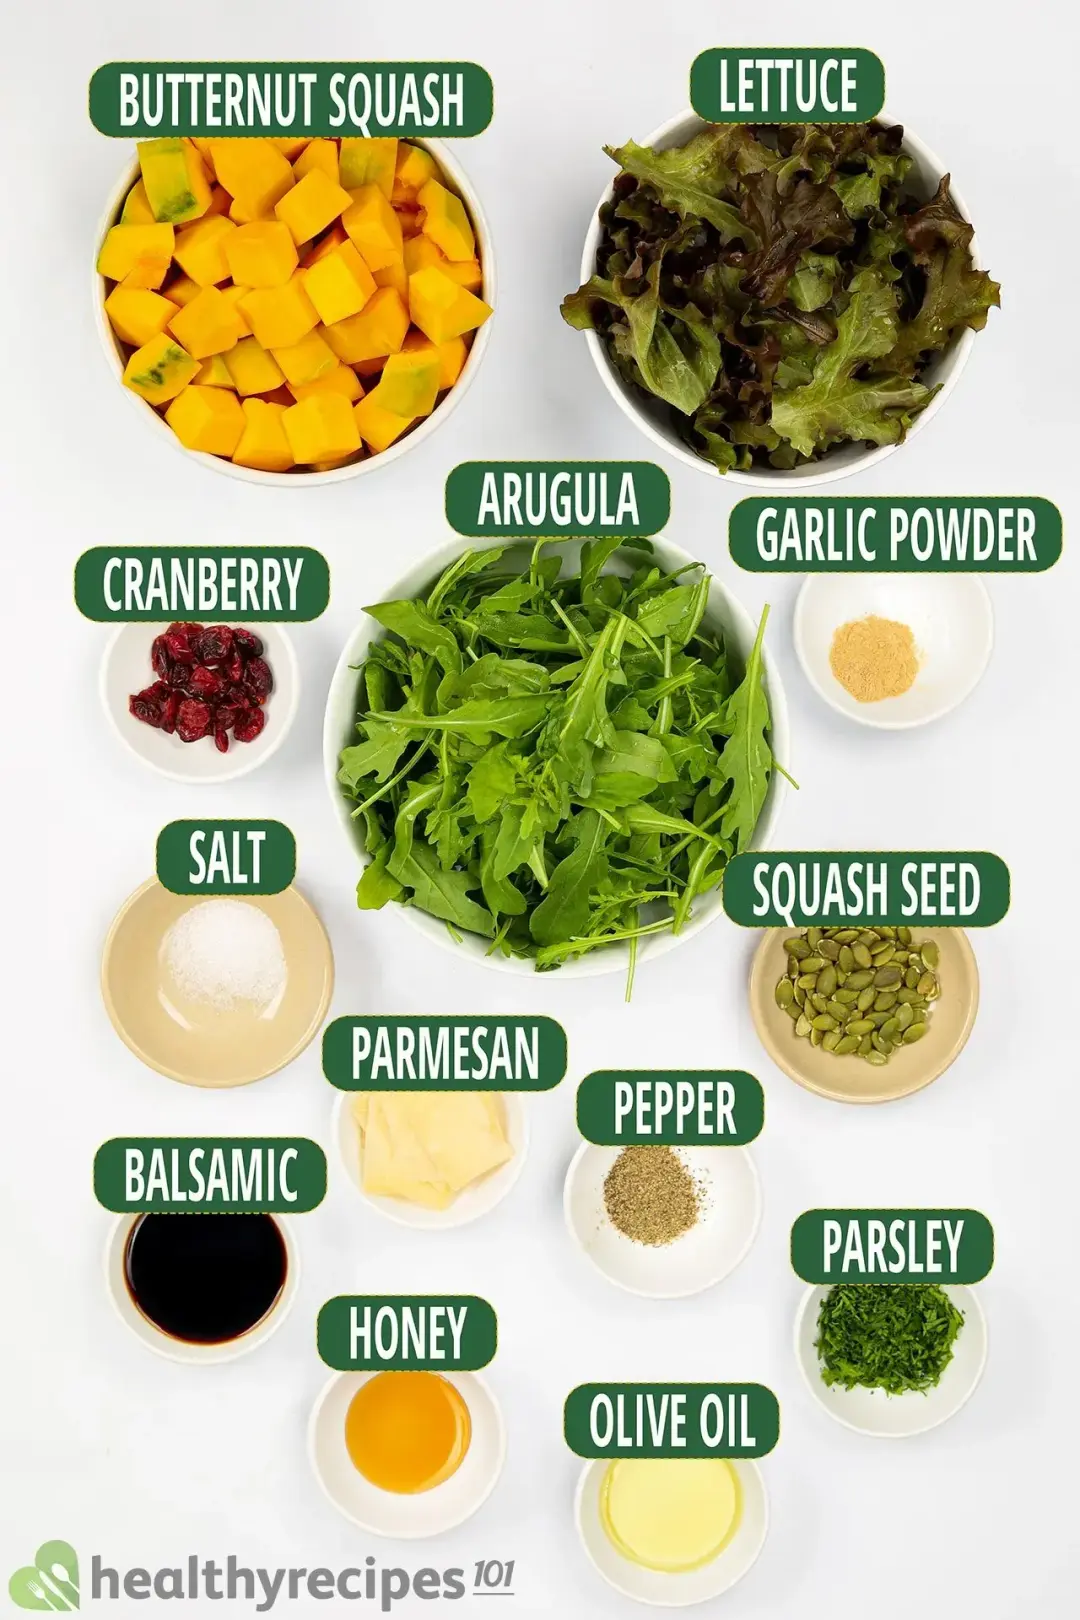 Ingredients for Butternut Squash Salad